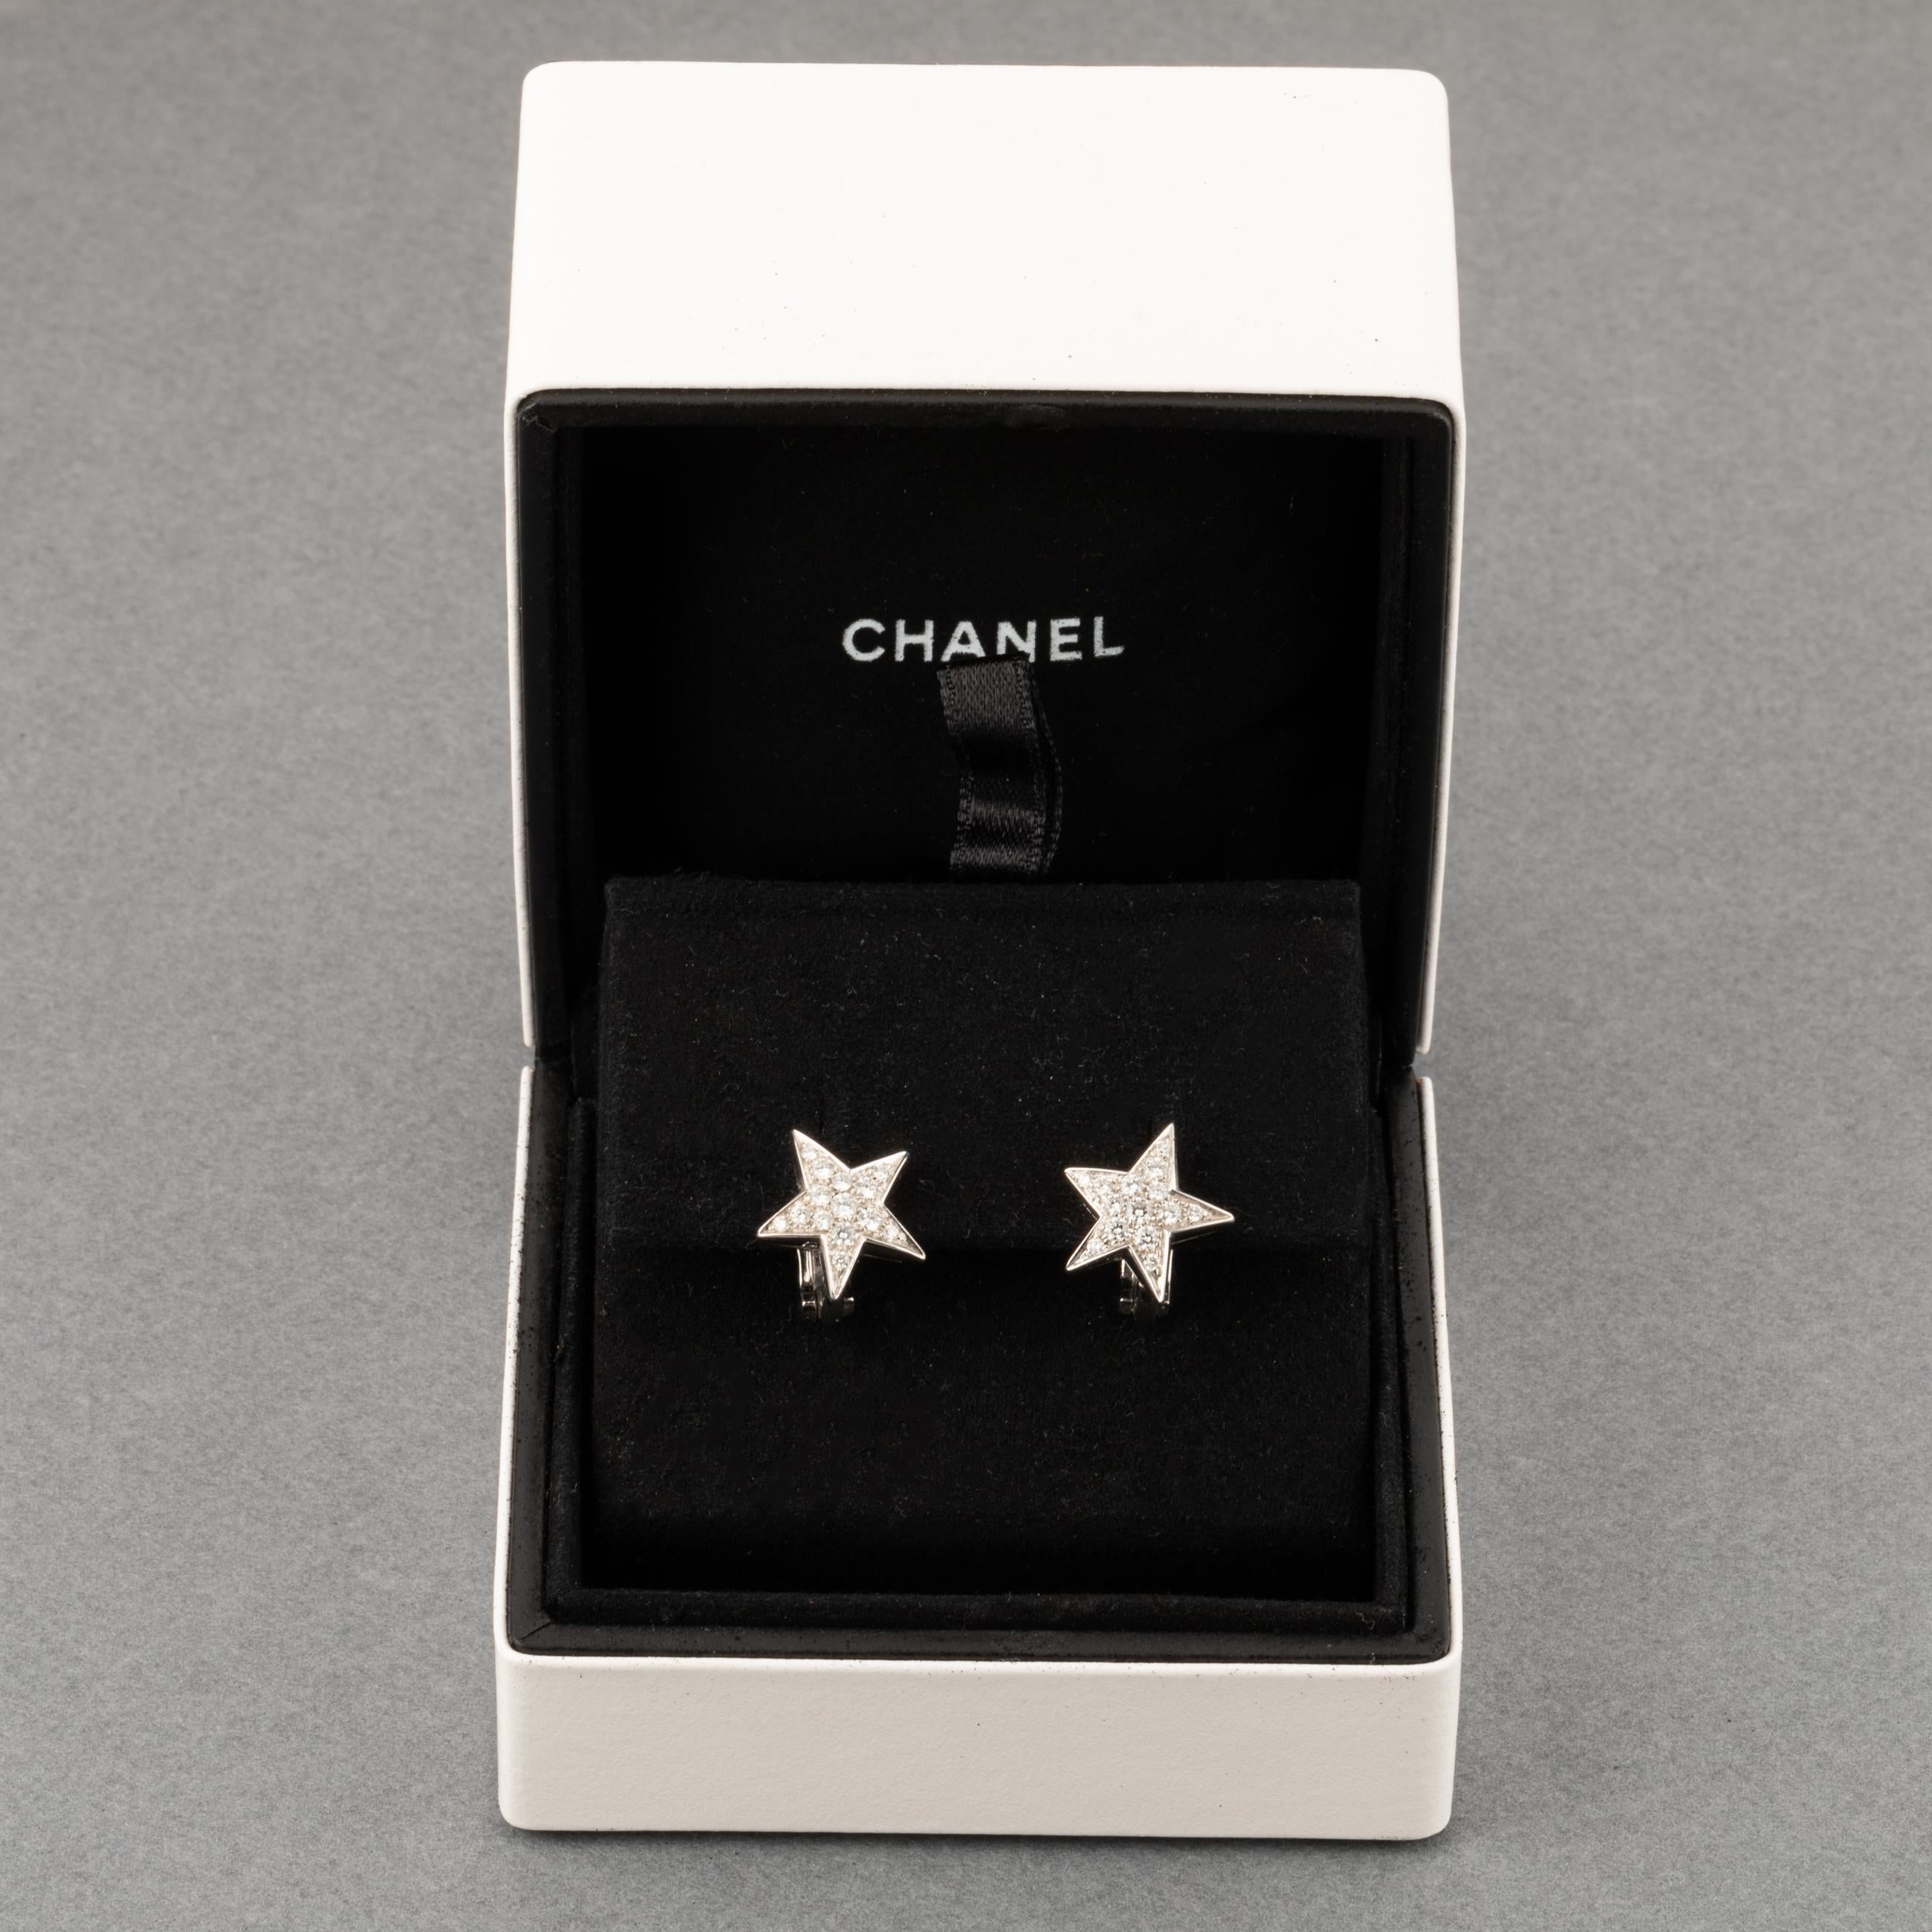 chanel diamond earrings price